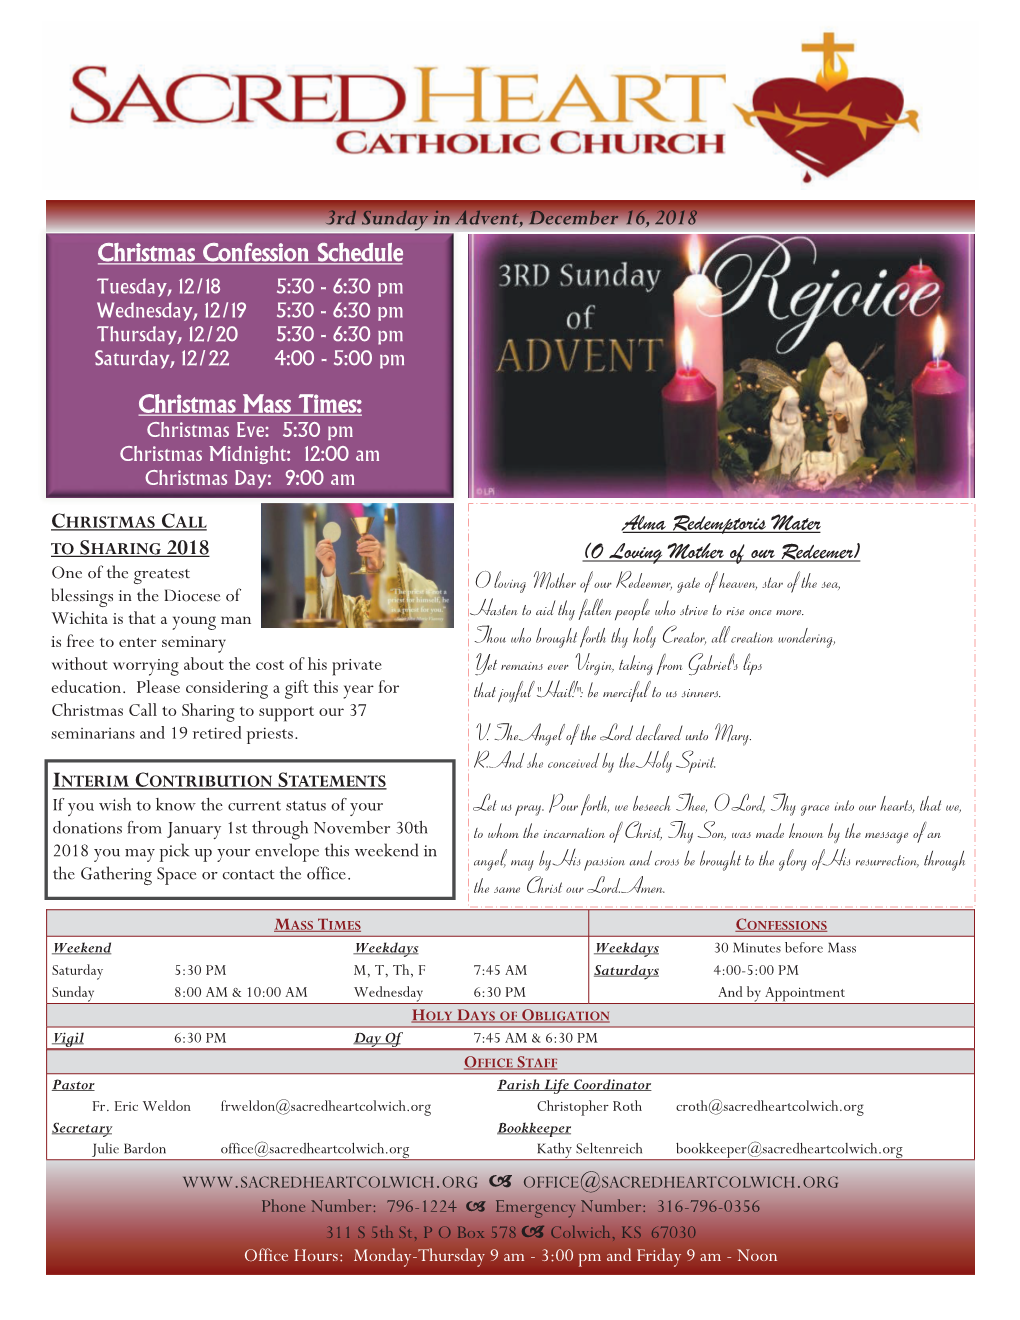 3Rd Sunday in Advent, December 16, 2018 Alma Redemptoris Mater